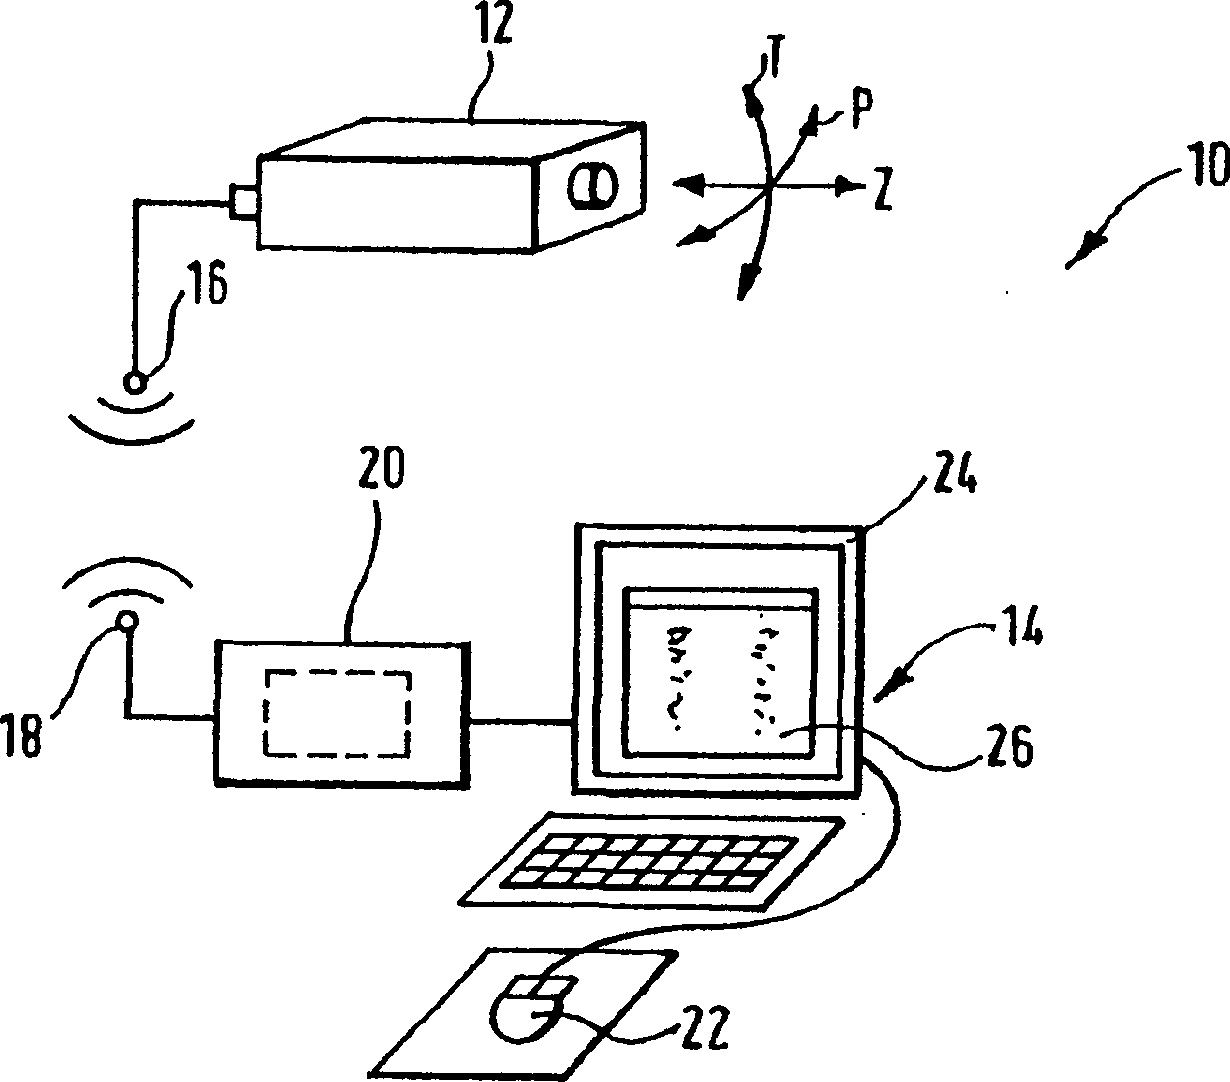 A camera control apparatus and method